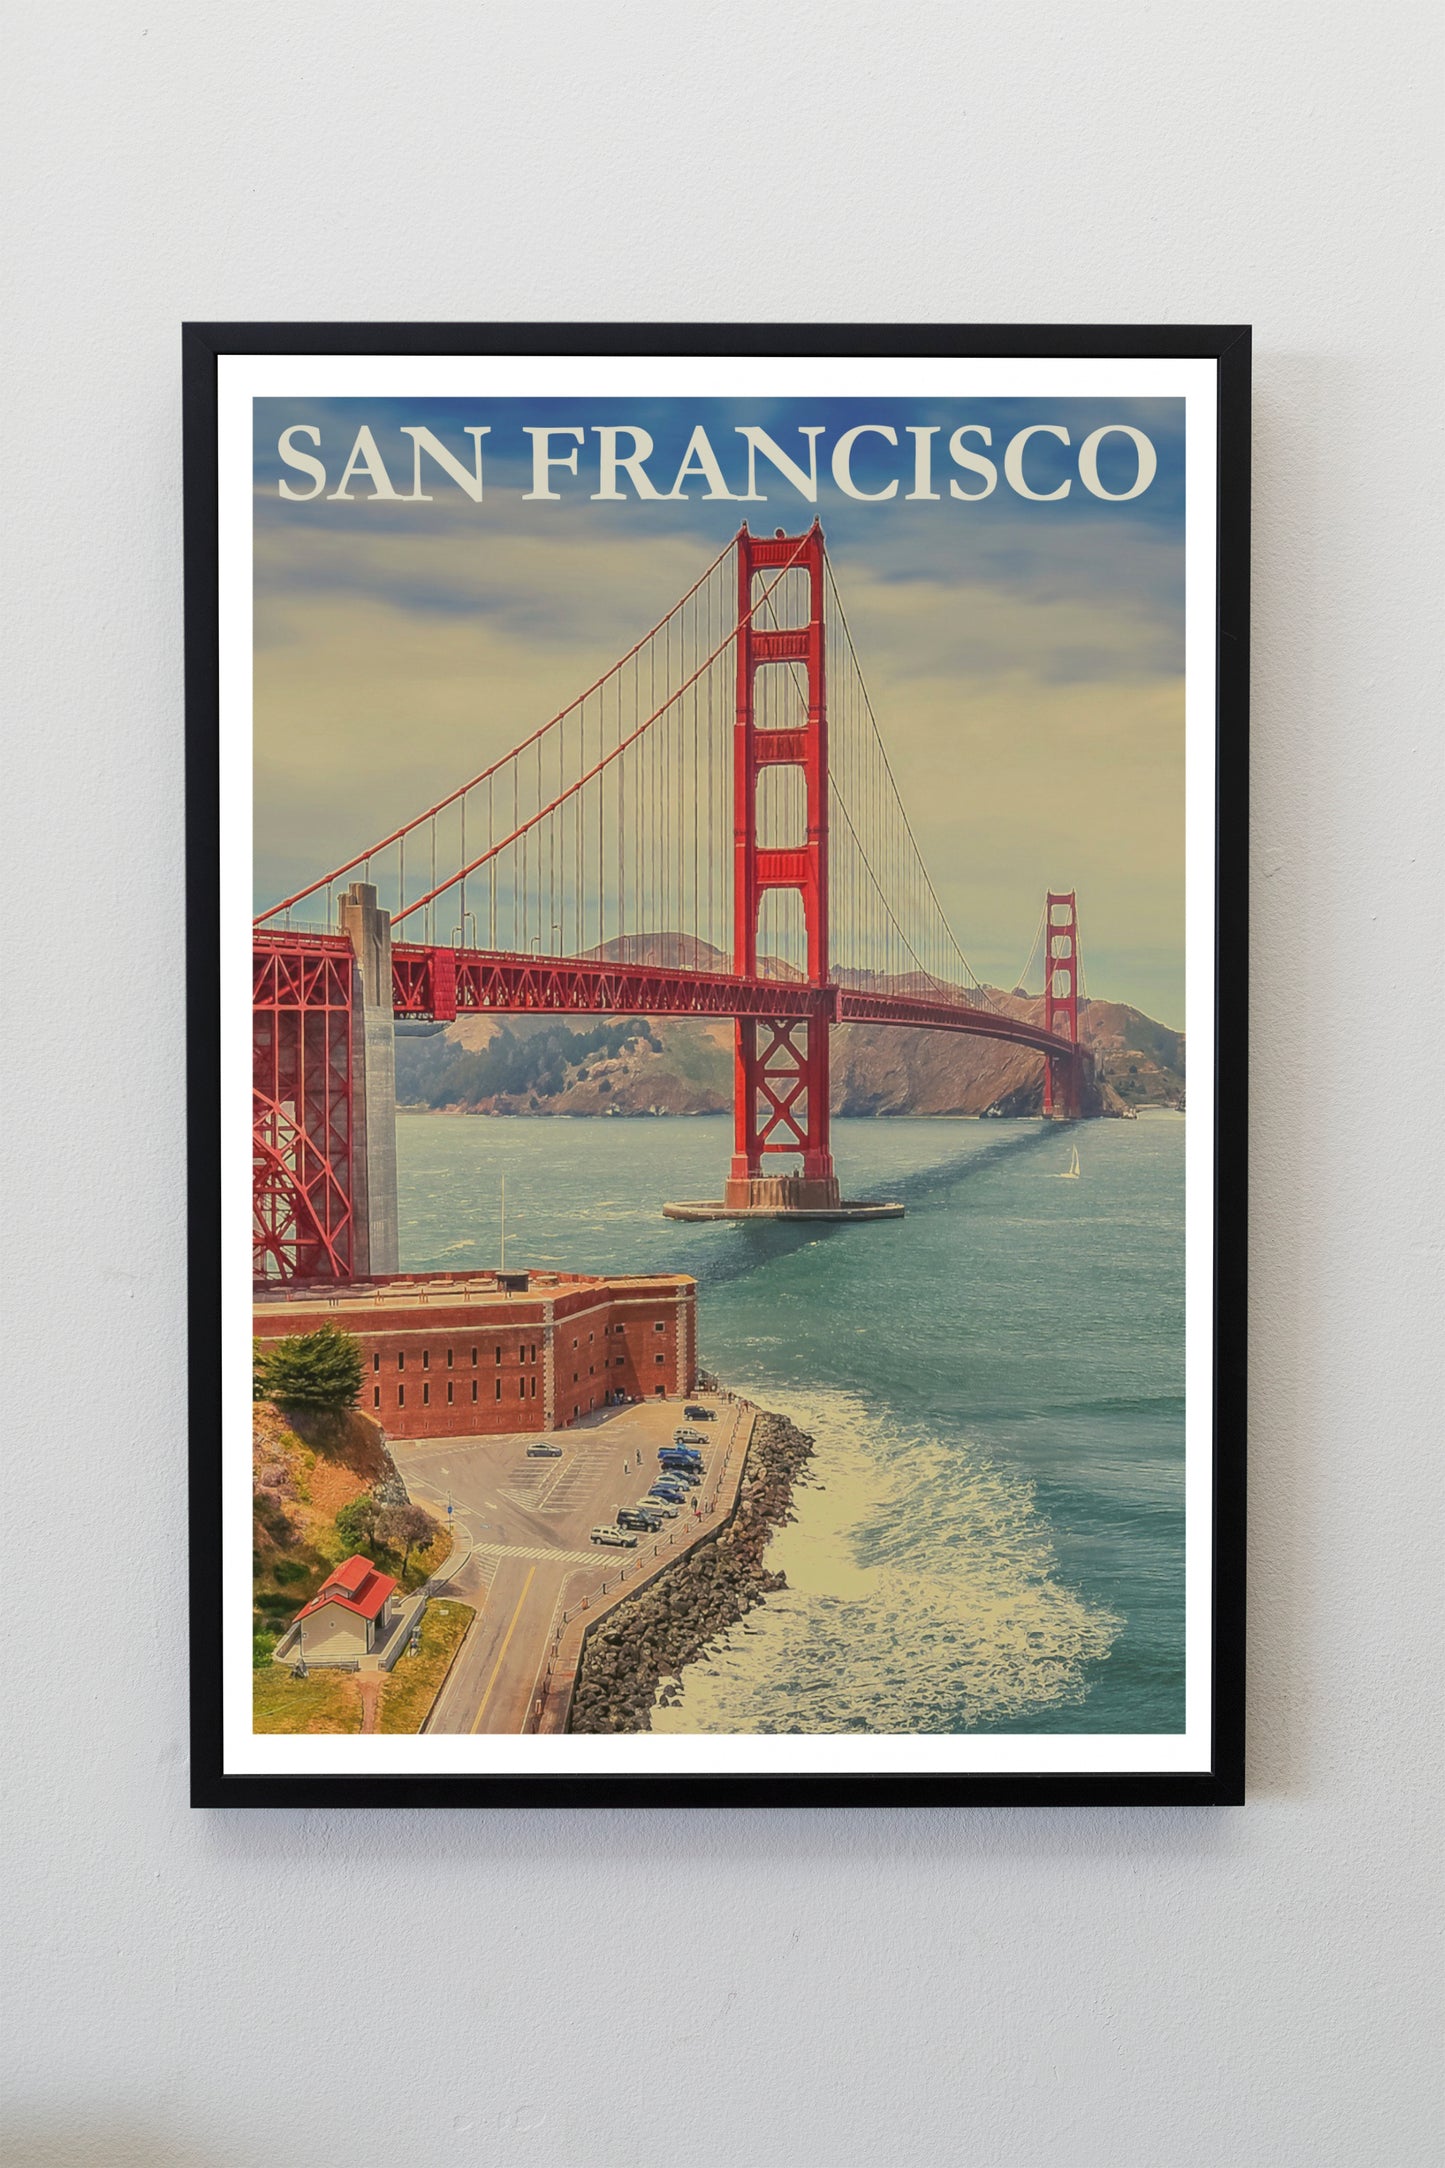 San Francisco Travel Poster Print Wall Hanging Decor